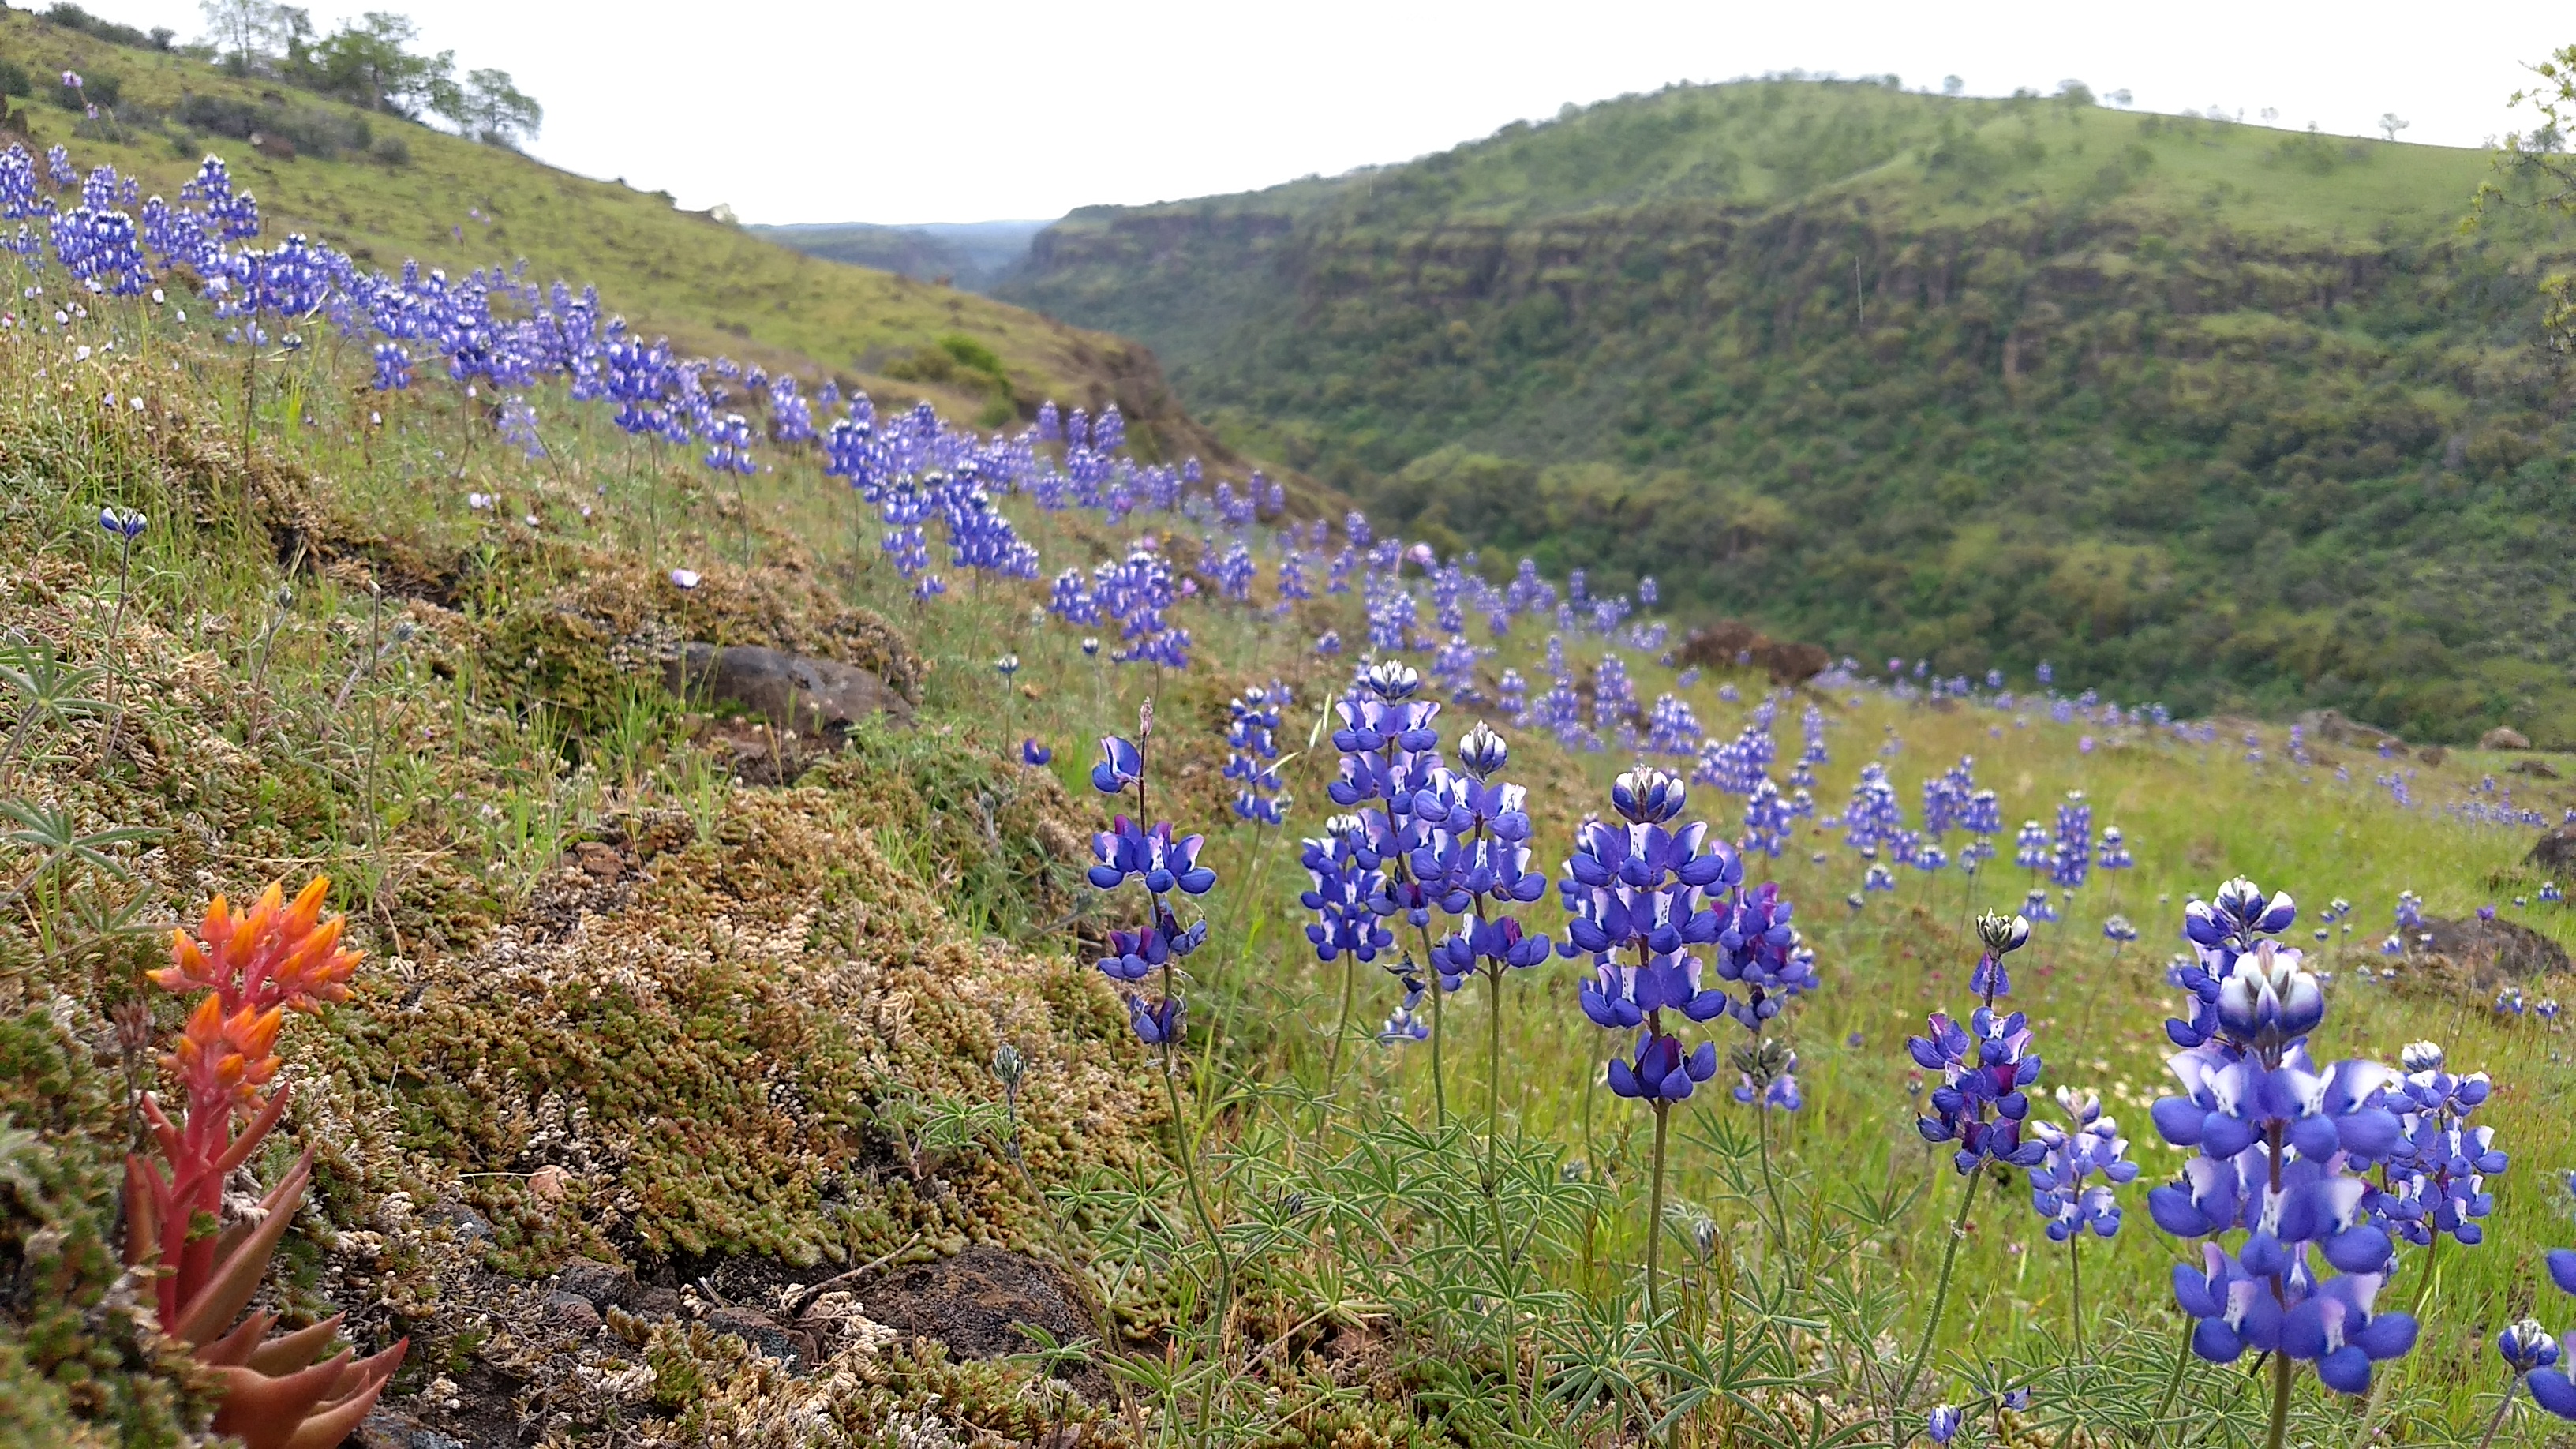 Purple flowers scattered on a grassy hillside.